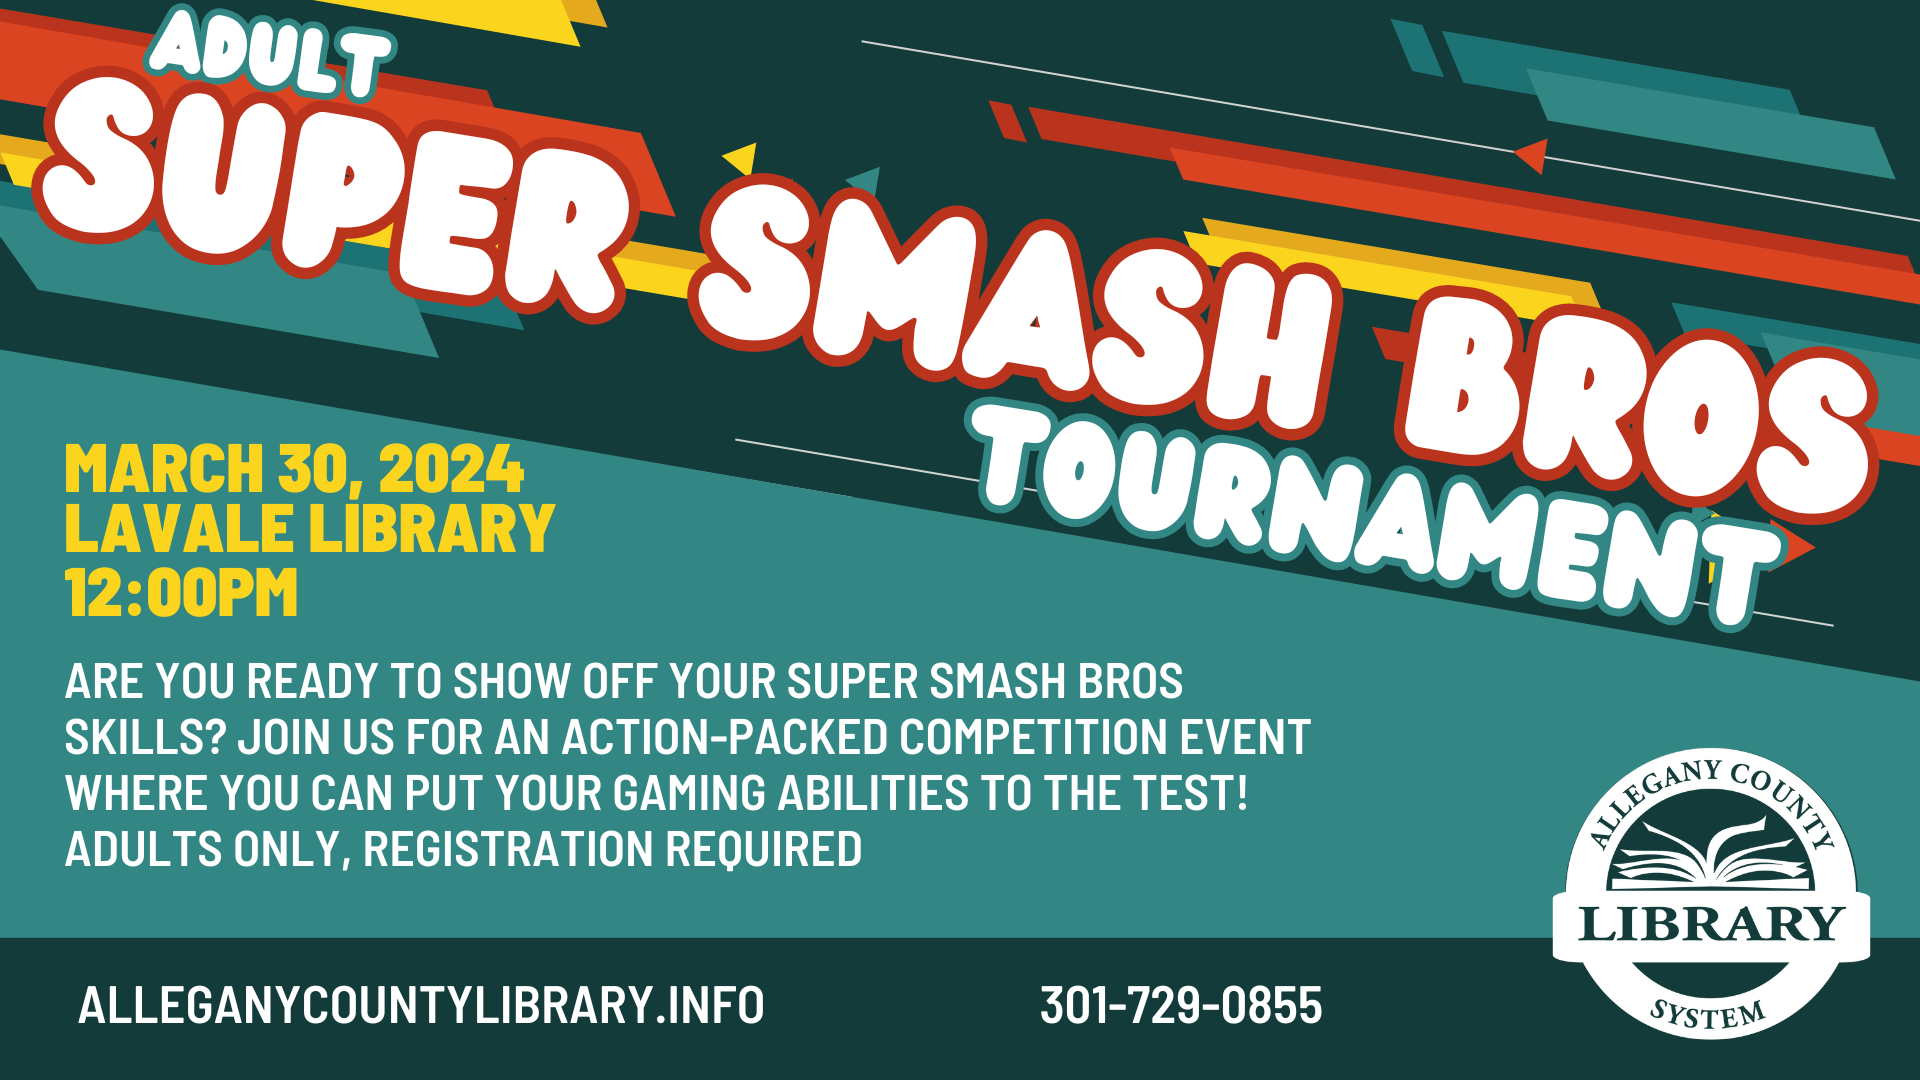 Adult Smash Bros Tournament flyer with details